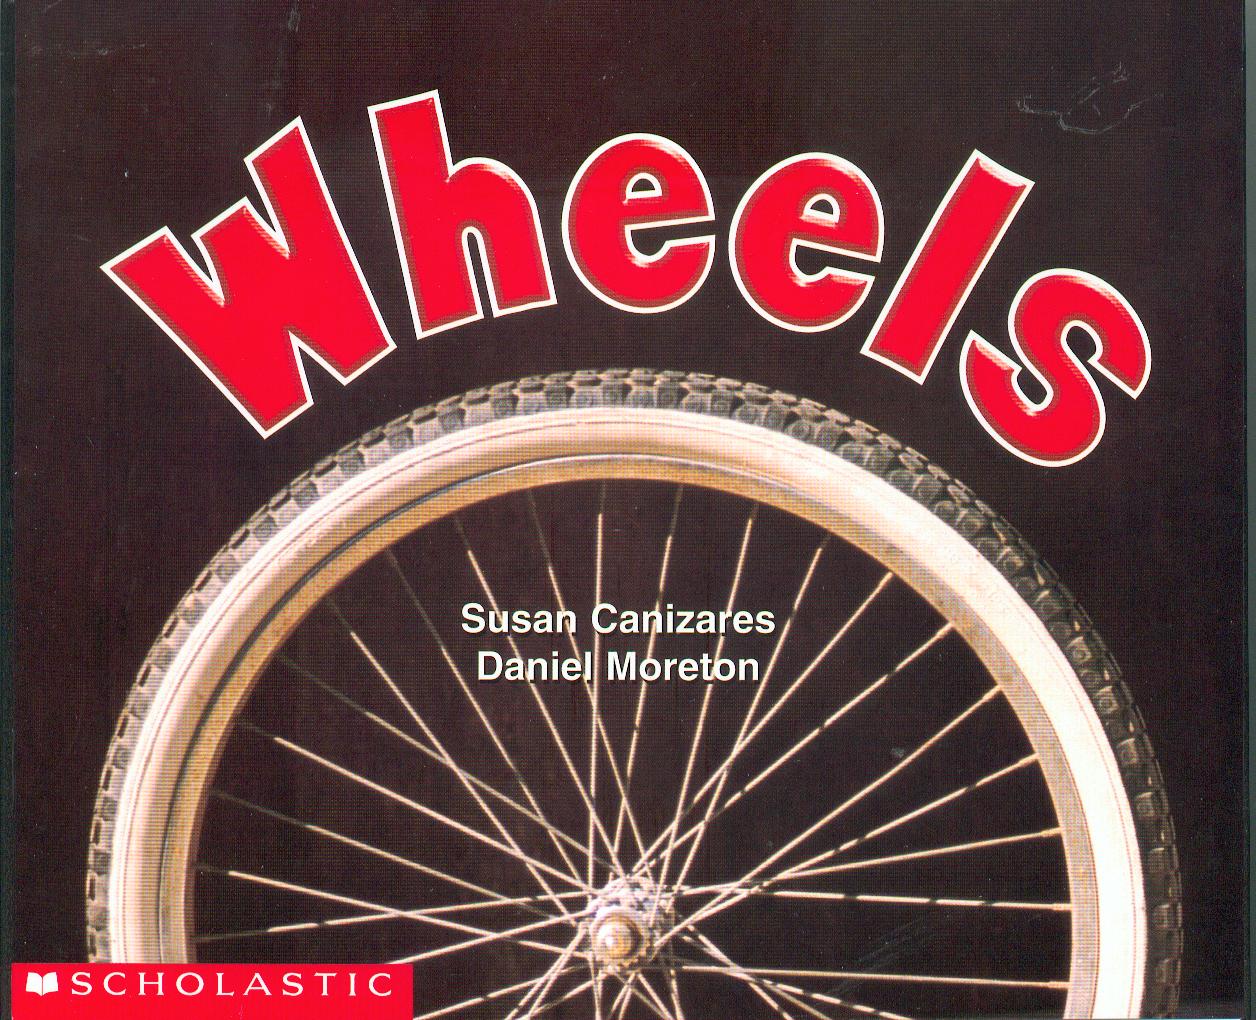 Wheels / Susan Canizares and Daniel Moreton.